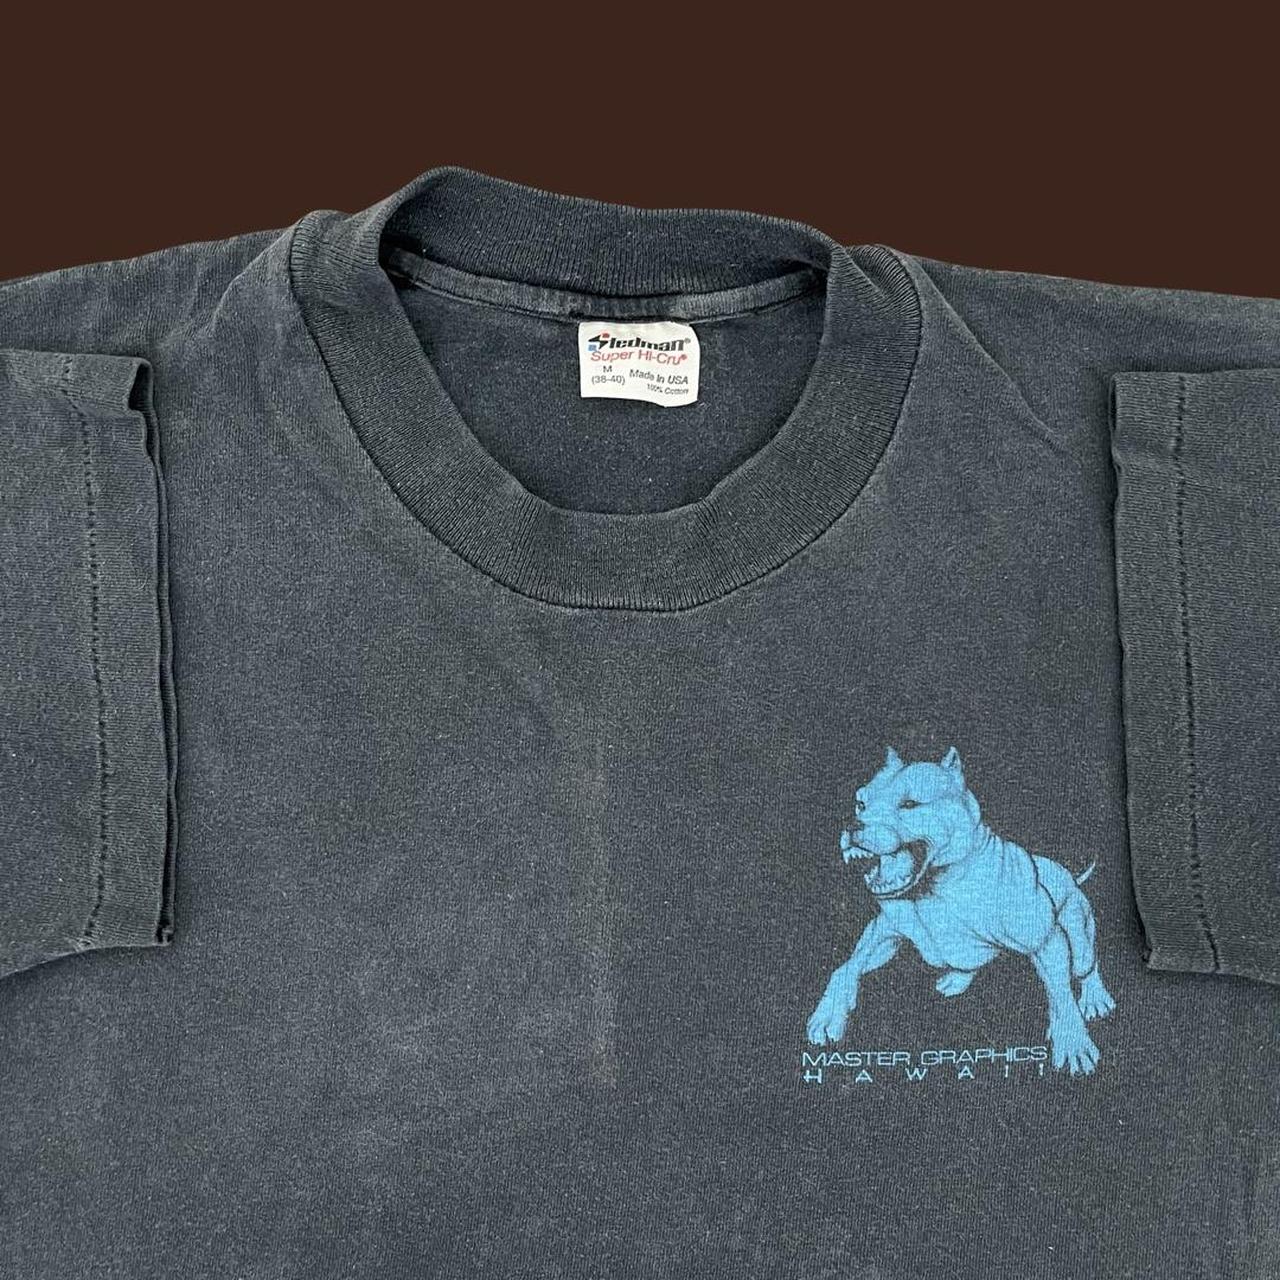 Vintage 80s Master Graphics Hawaii pitbull t shirt - Depop